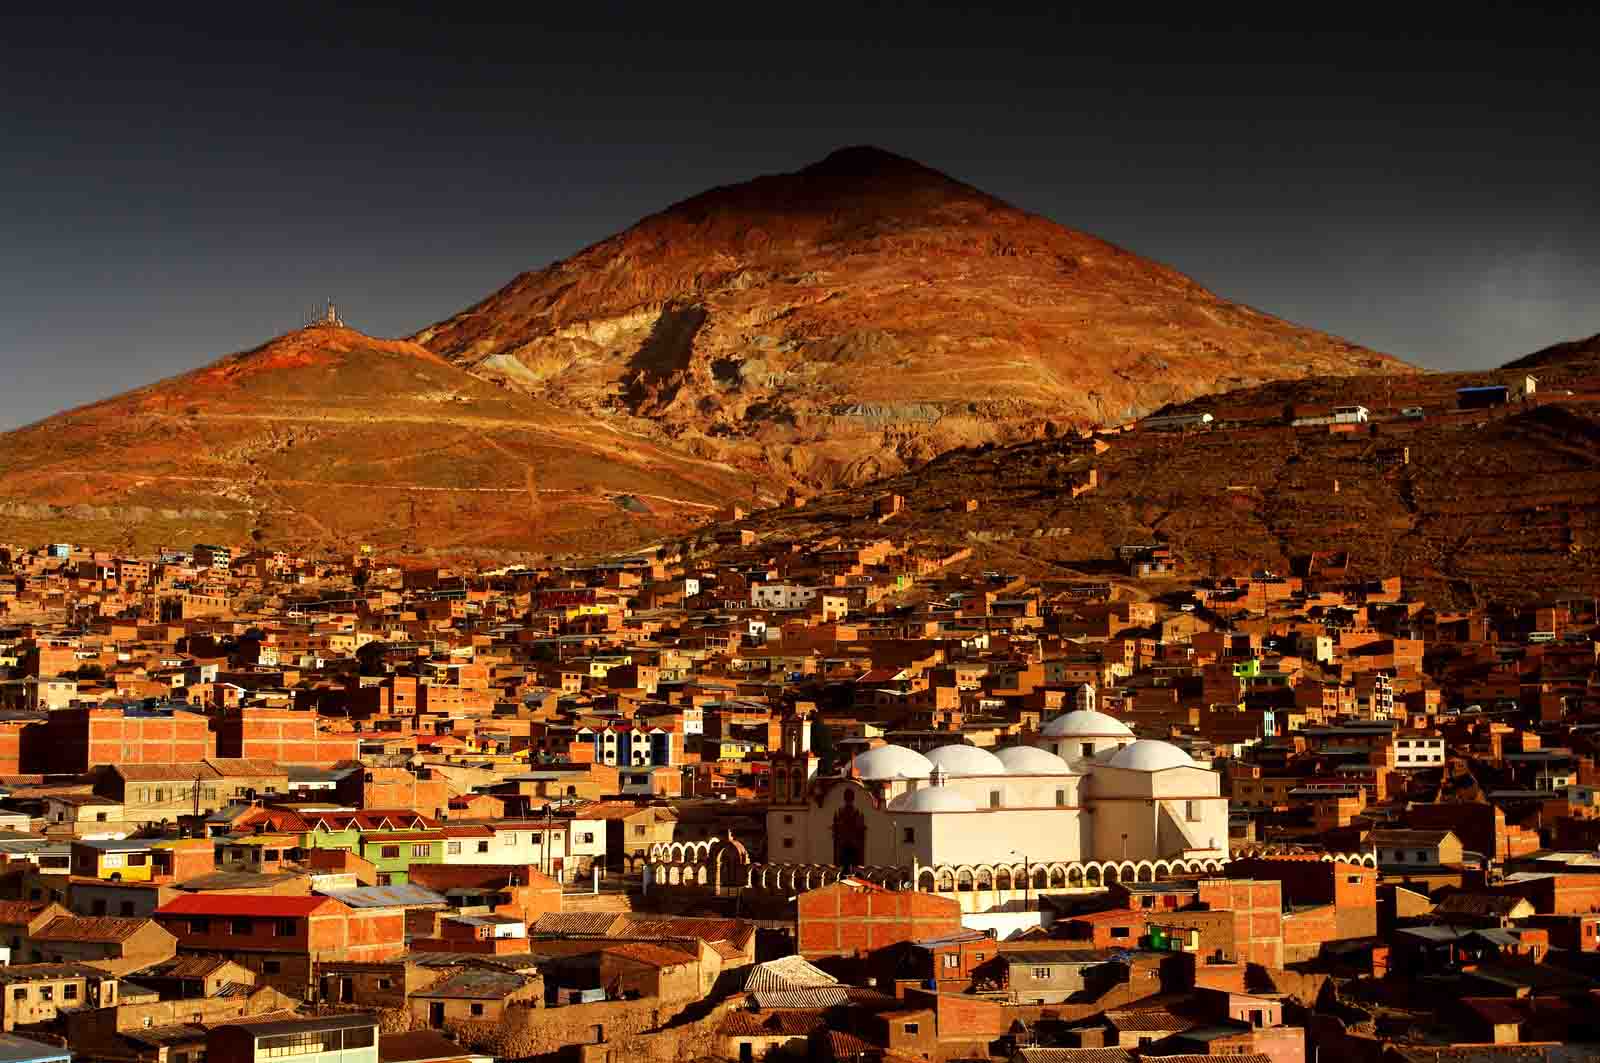 City of Potosí | Bolivia